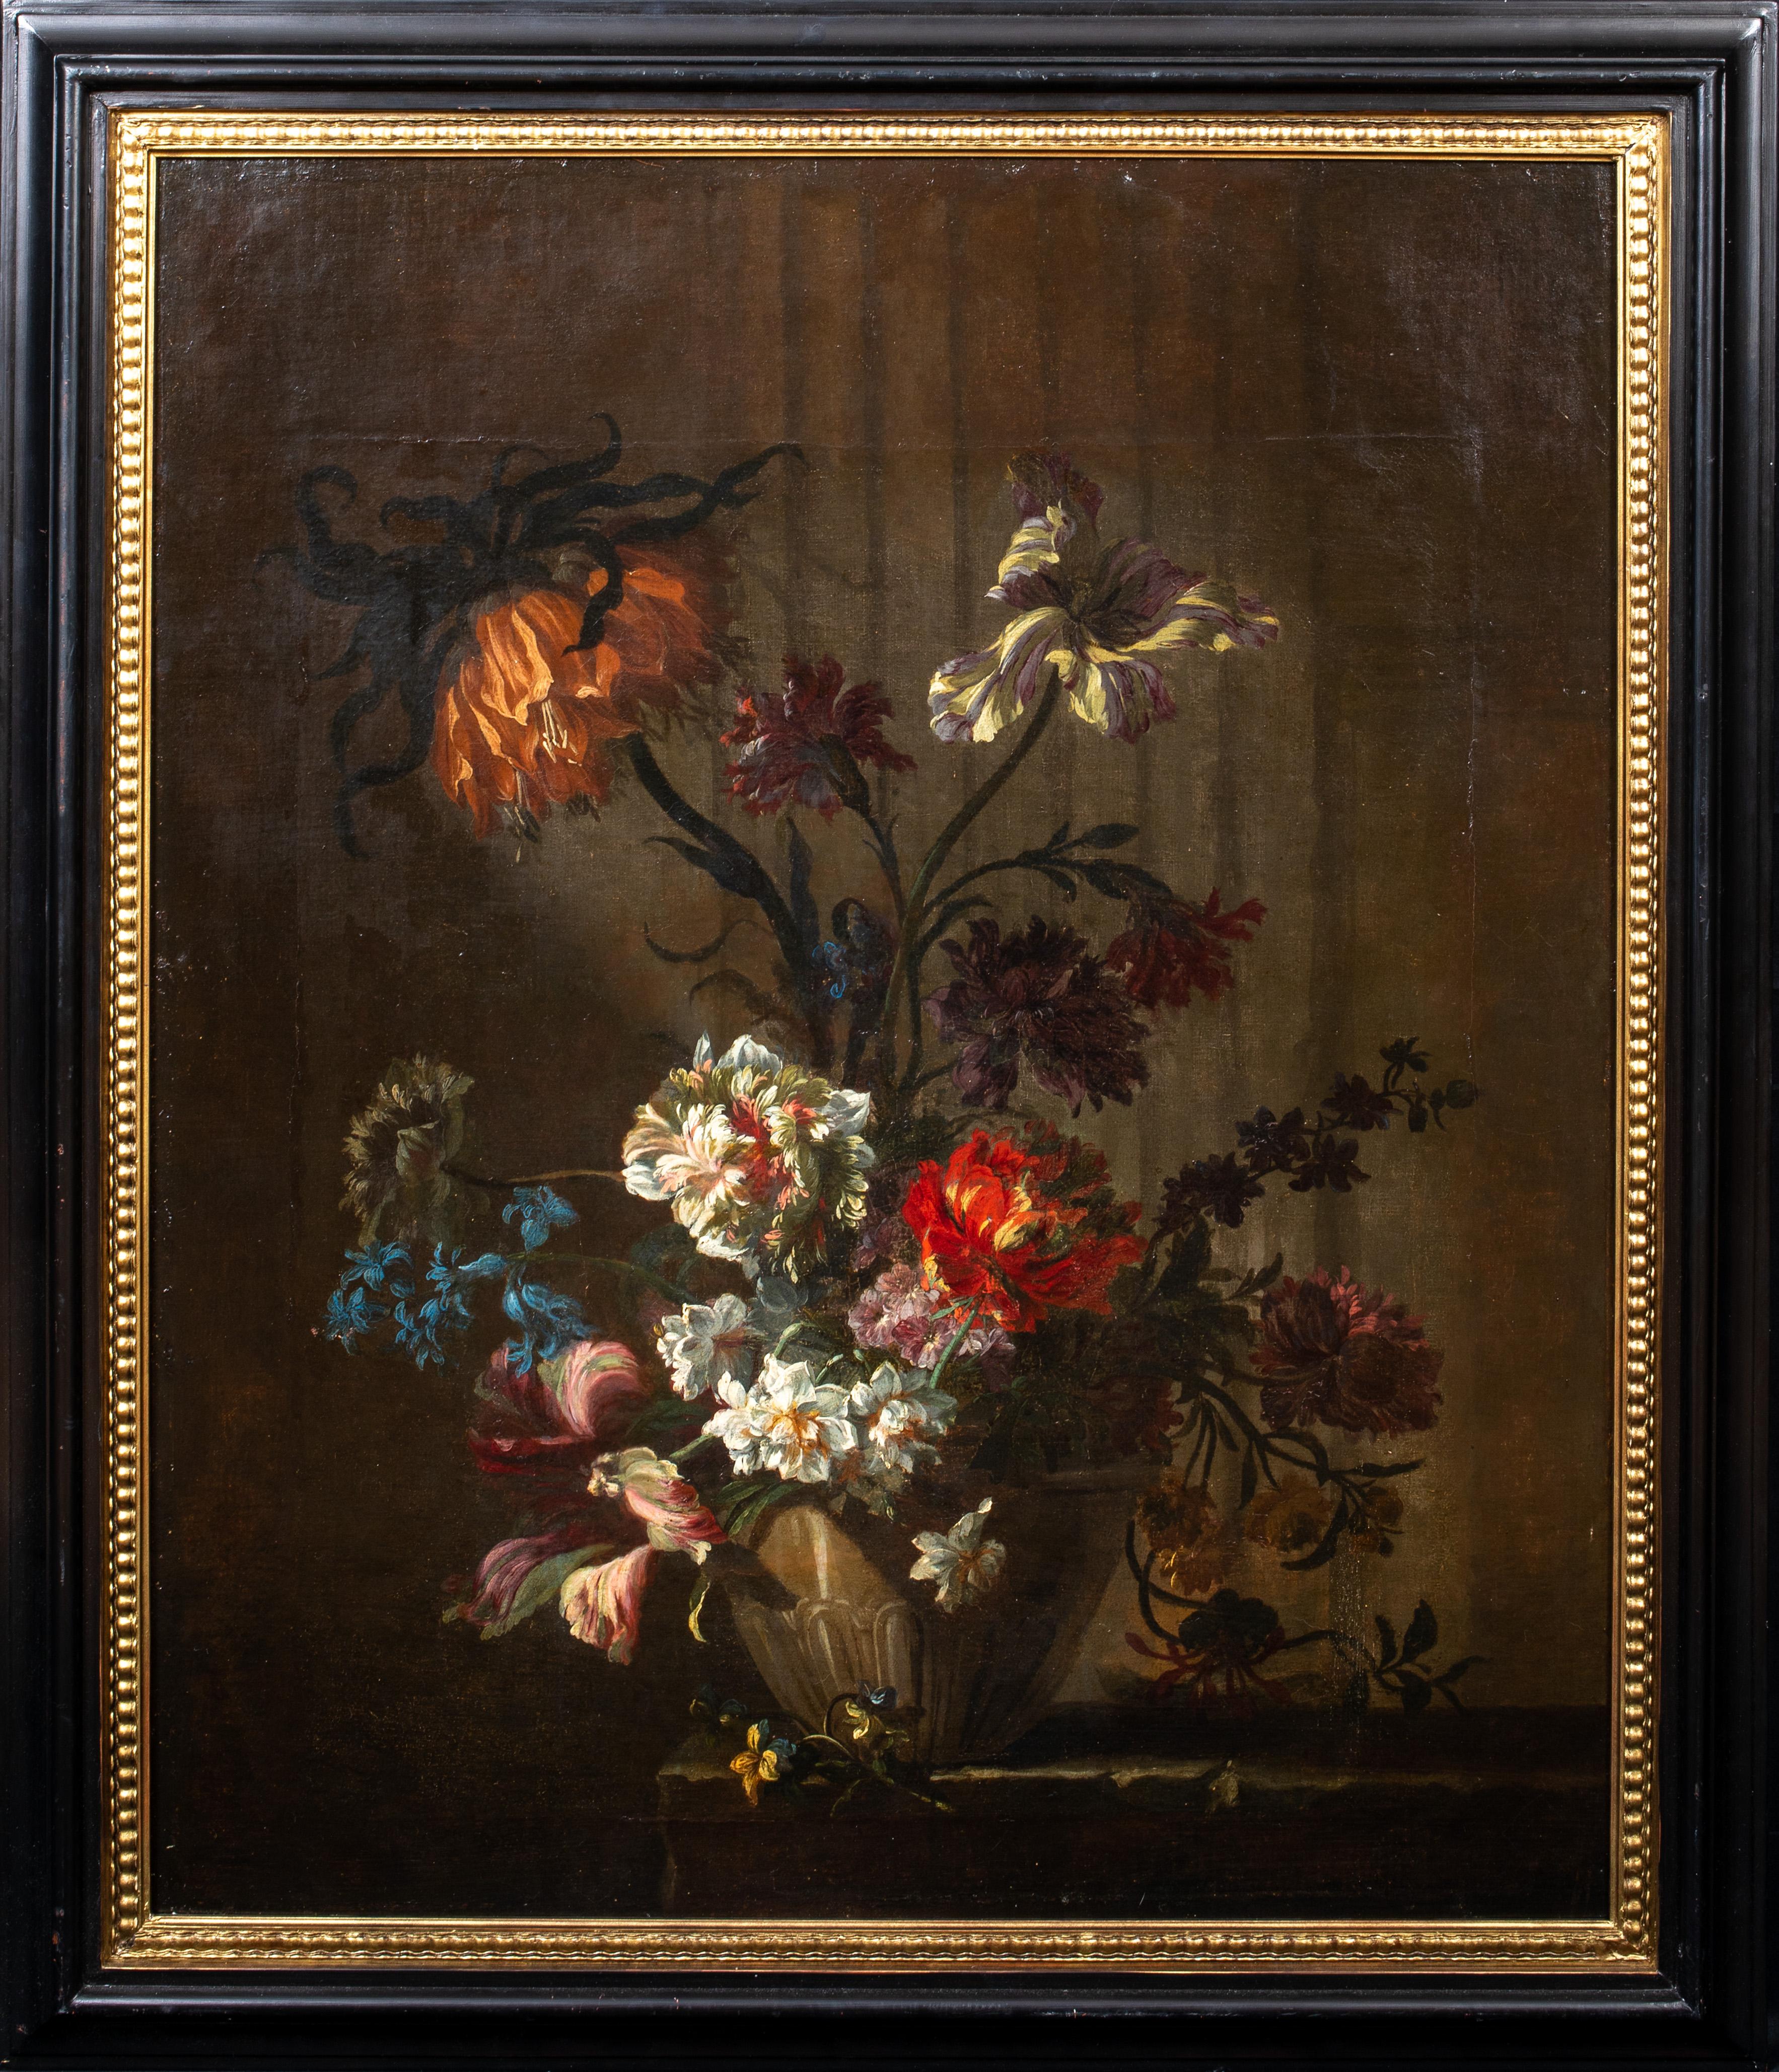 Jean-Baptiste Monnoyer Portrait Painting - Still Life Of Flowers In A Vase, 17th Century 